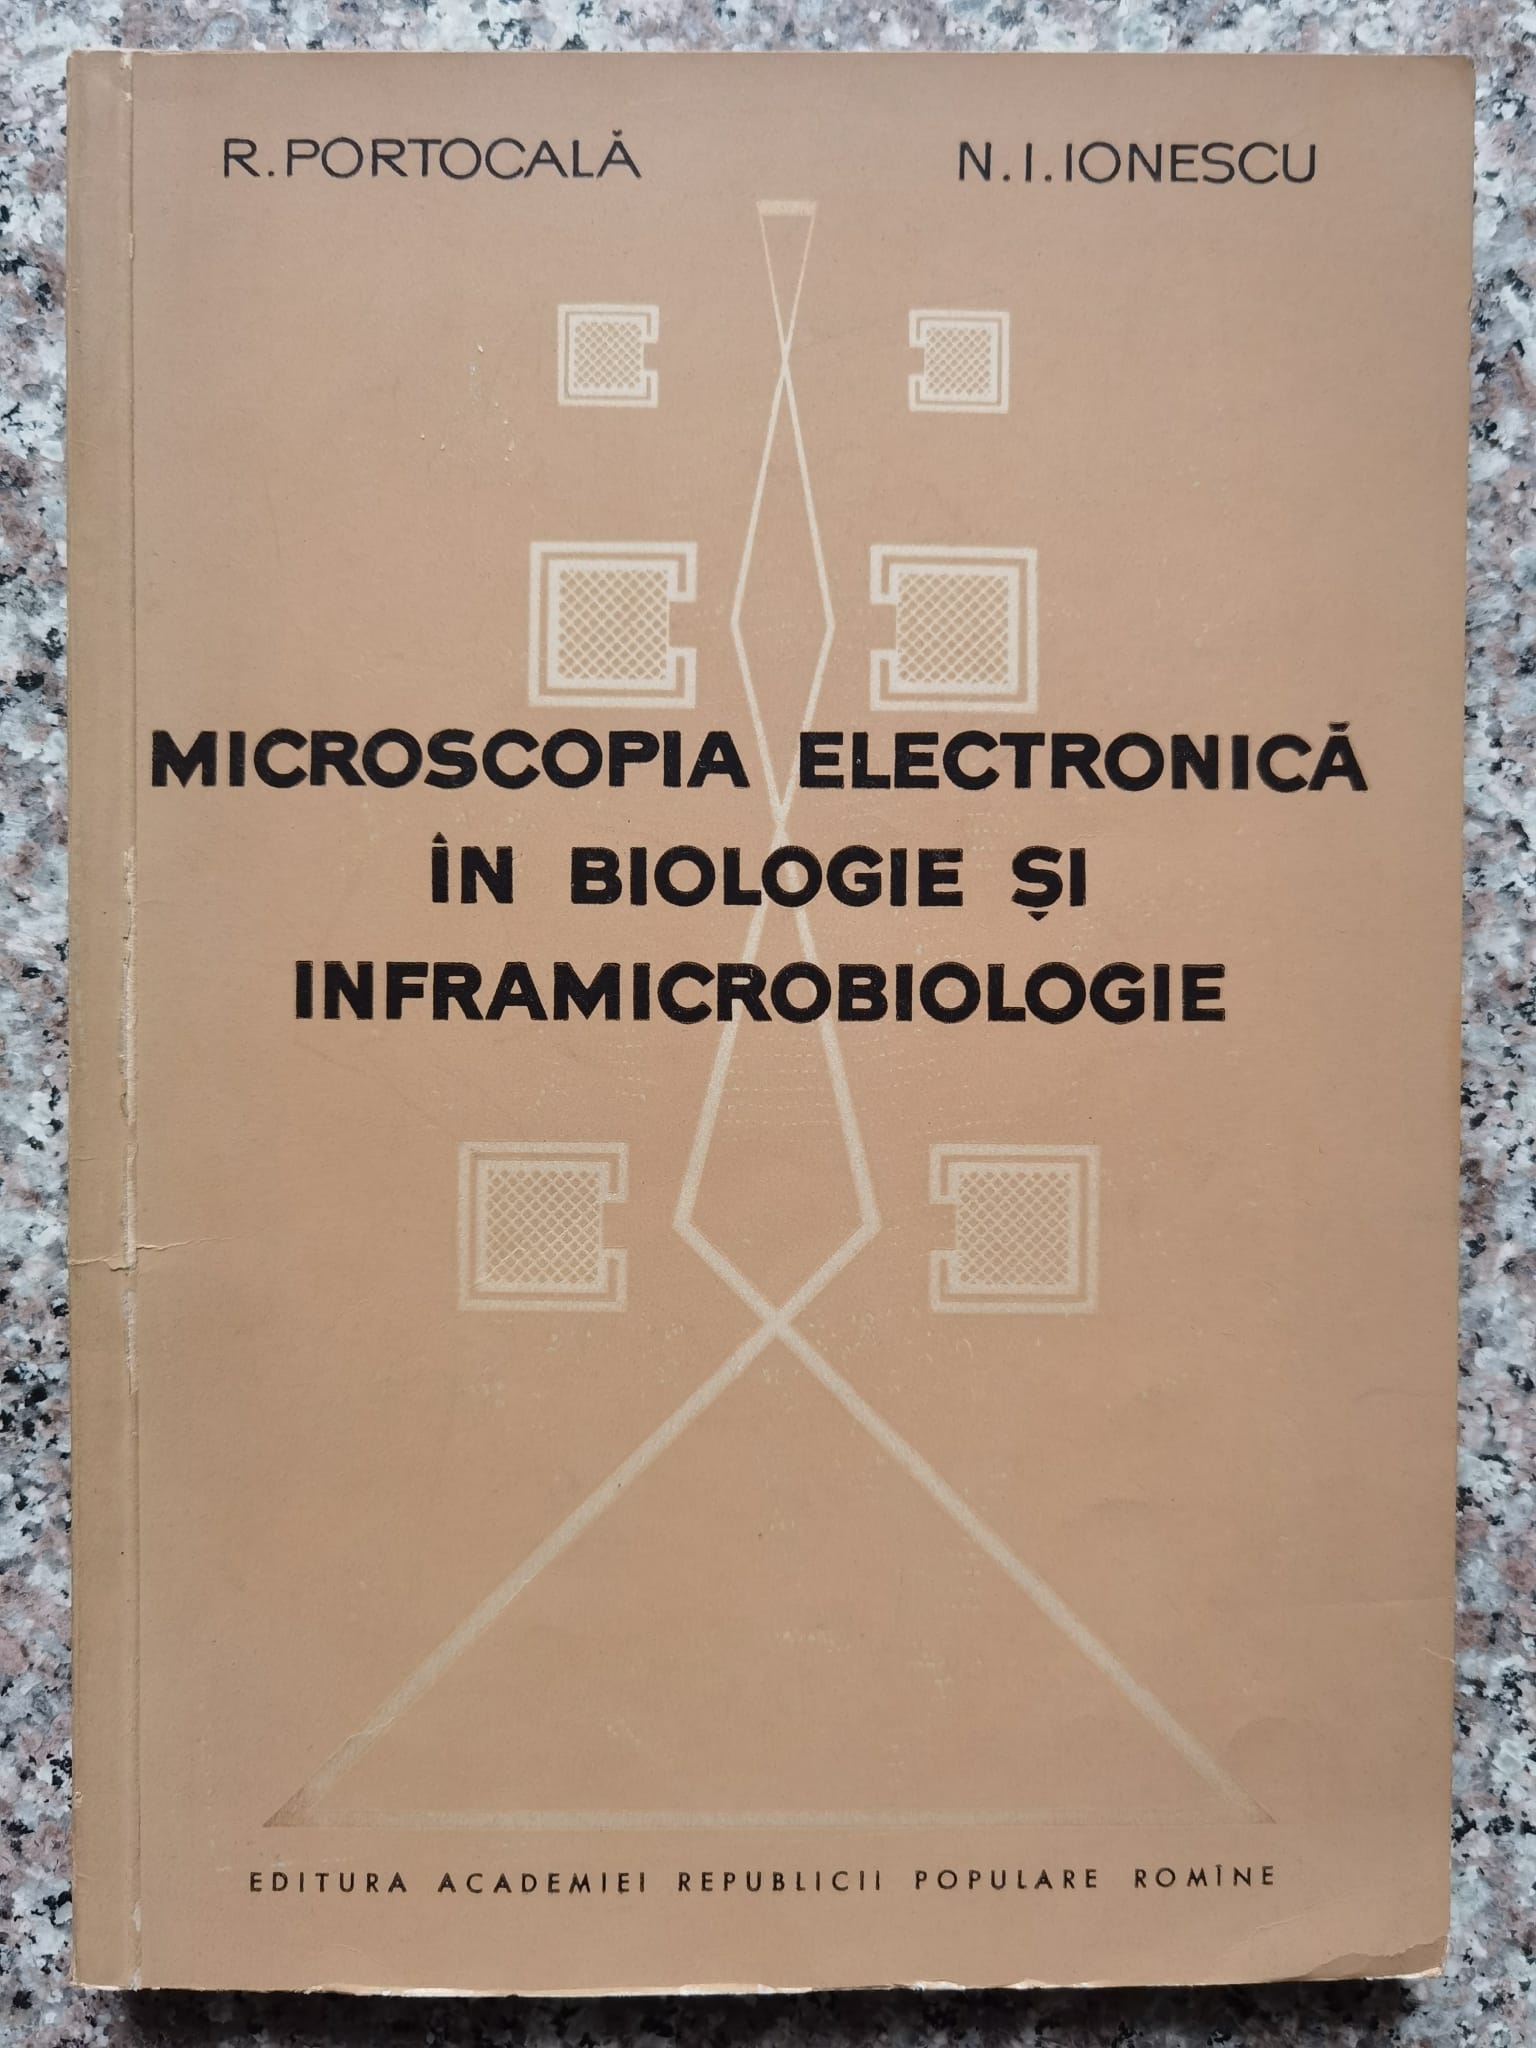 microscopia electronica in biologie si inframicrobiologie                                            r. portocala, n.i. ionescu                                                                          